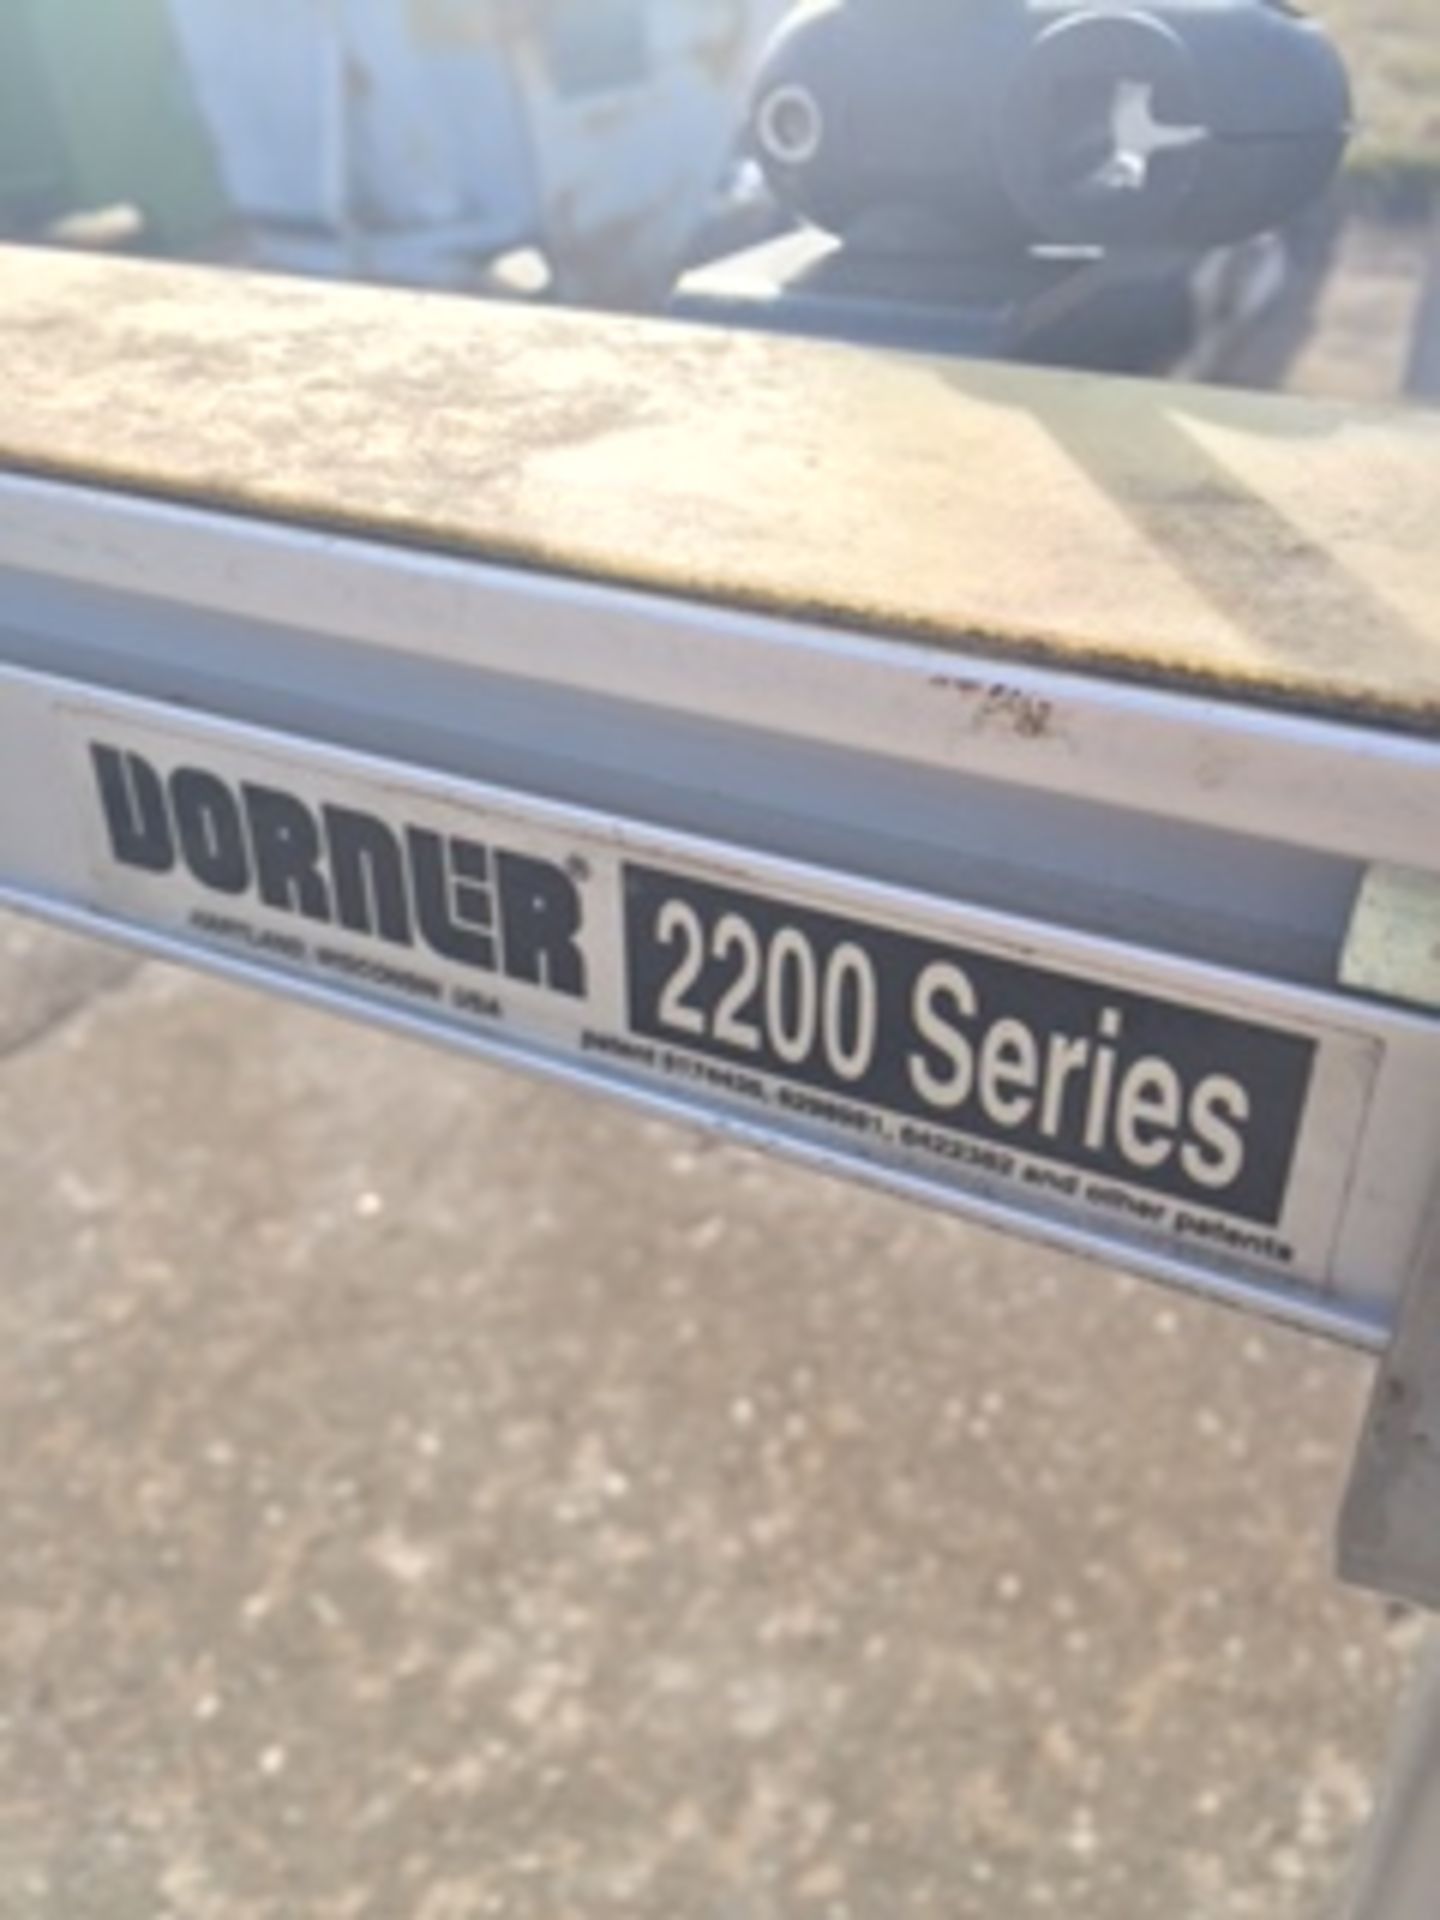 Conveyor with Speed Control, Dorner, 2200 Series - Image 2 of 4